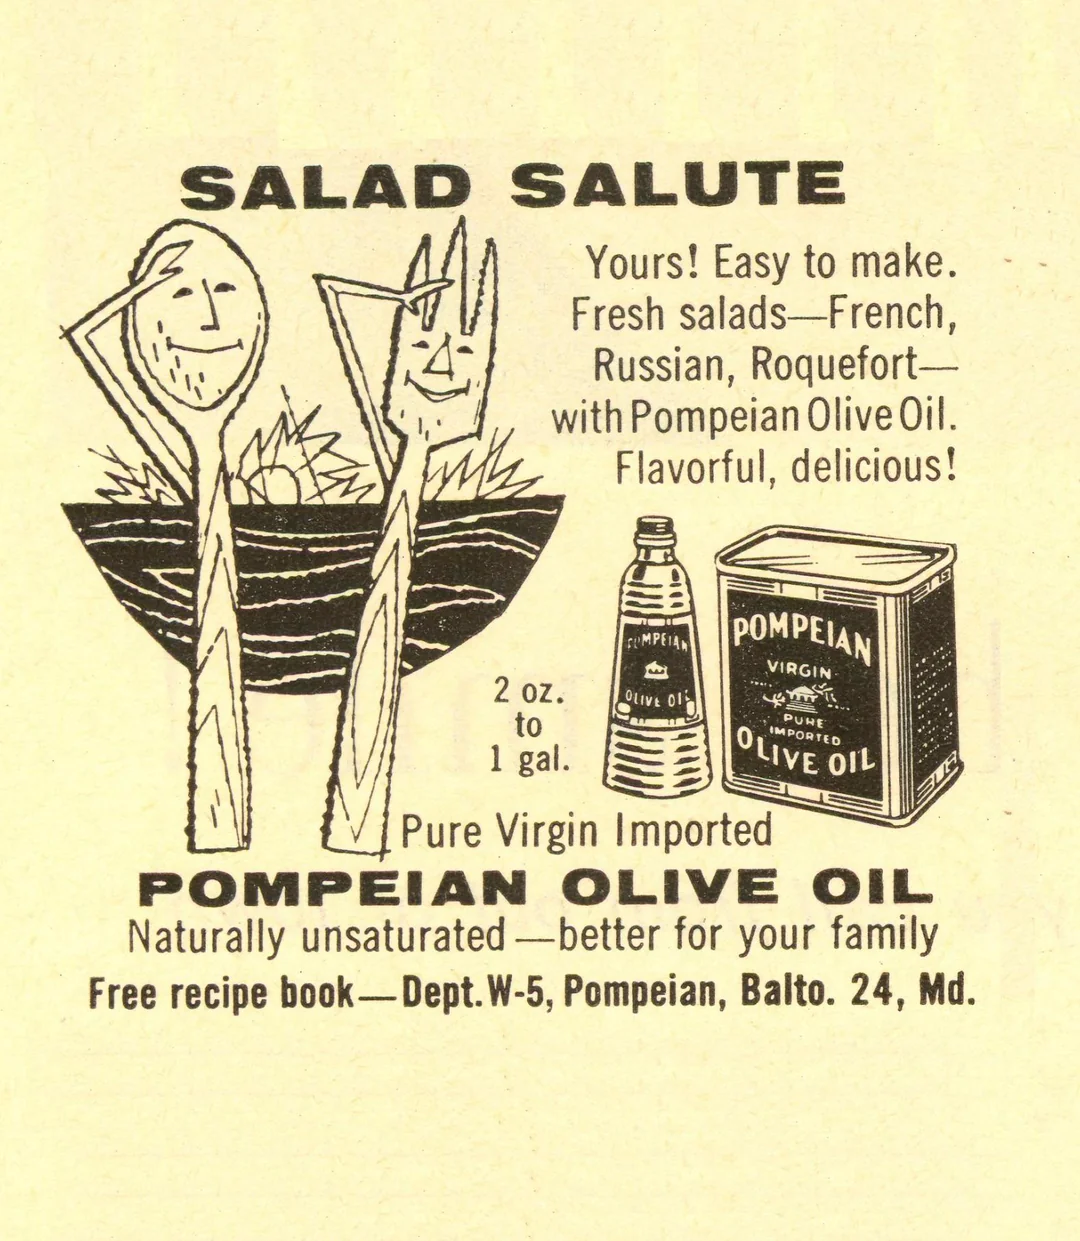 Pompeian Virgin Olive Oil, 1958